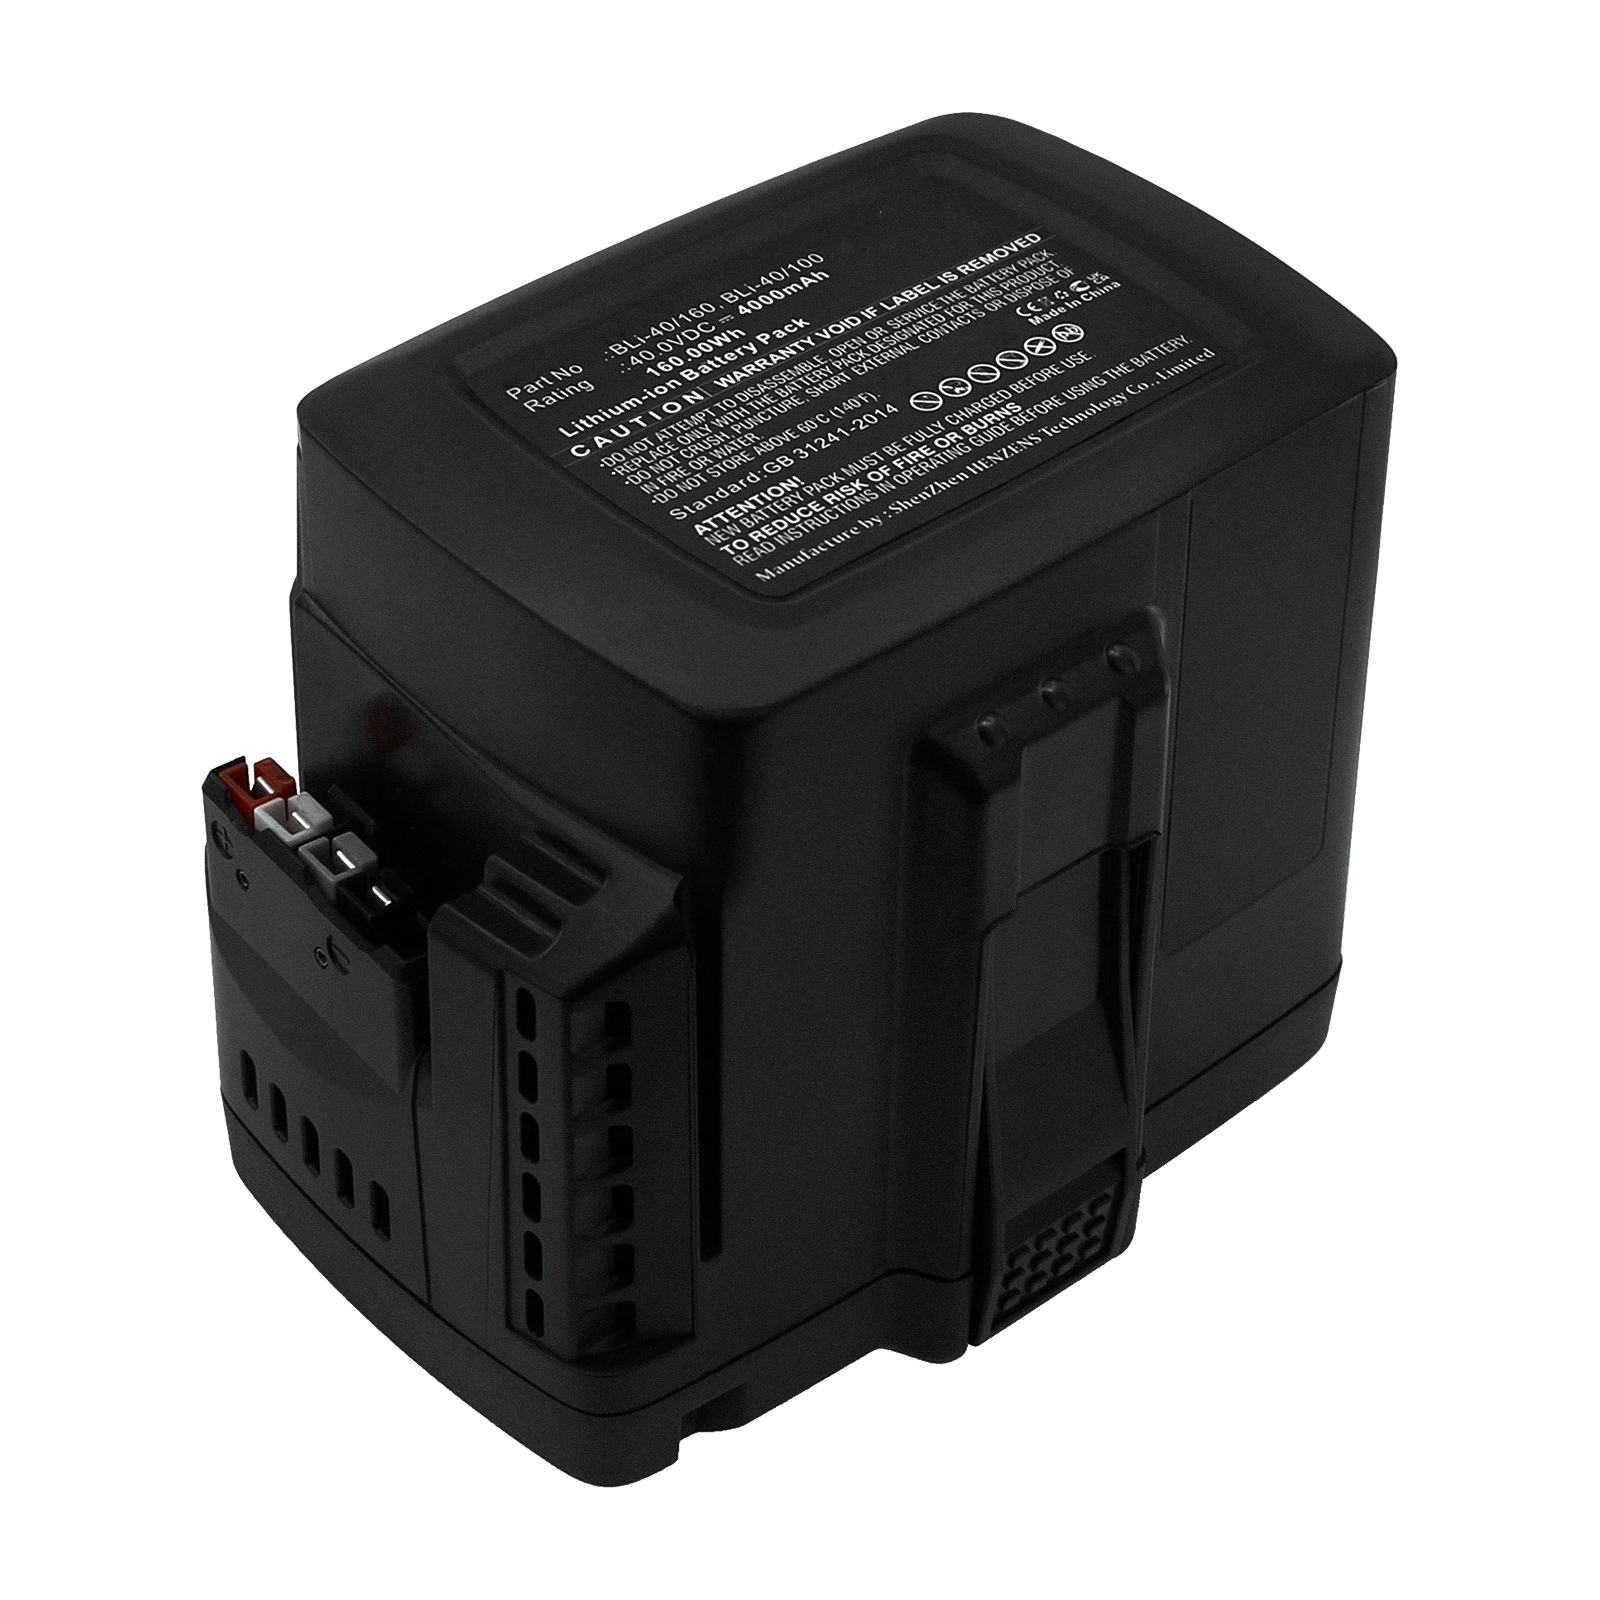 Synergy Digital Lawn Mower Battery, Compatible with Gardena BLi-40/100 Lawn Mower Battery (Li-ion, 40V, 4000mAh)